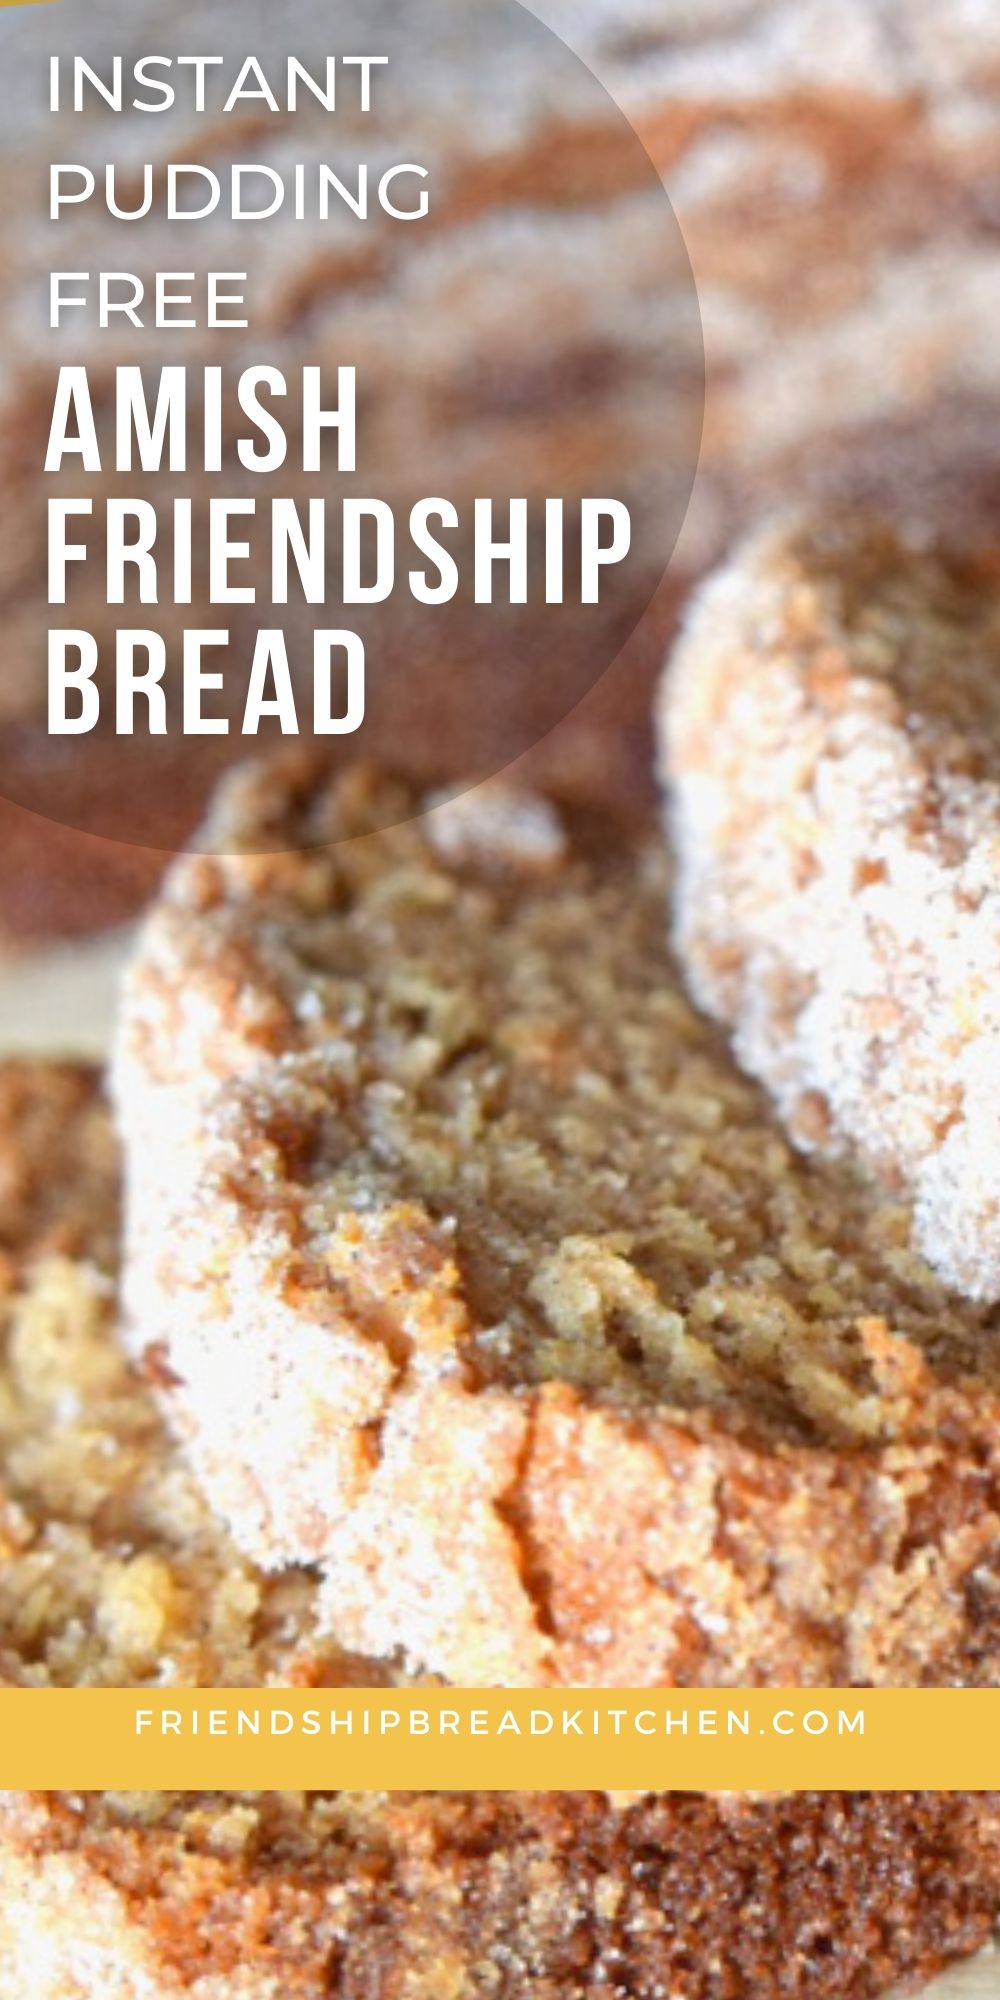 Amish Friendship Bread (No Pudding / Pudding Free)